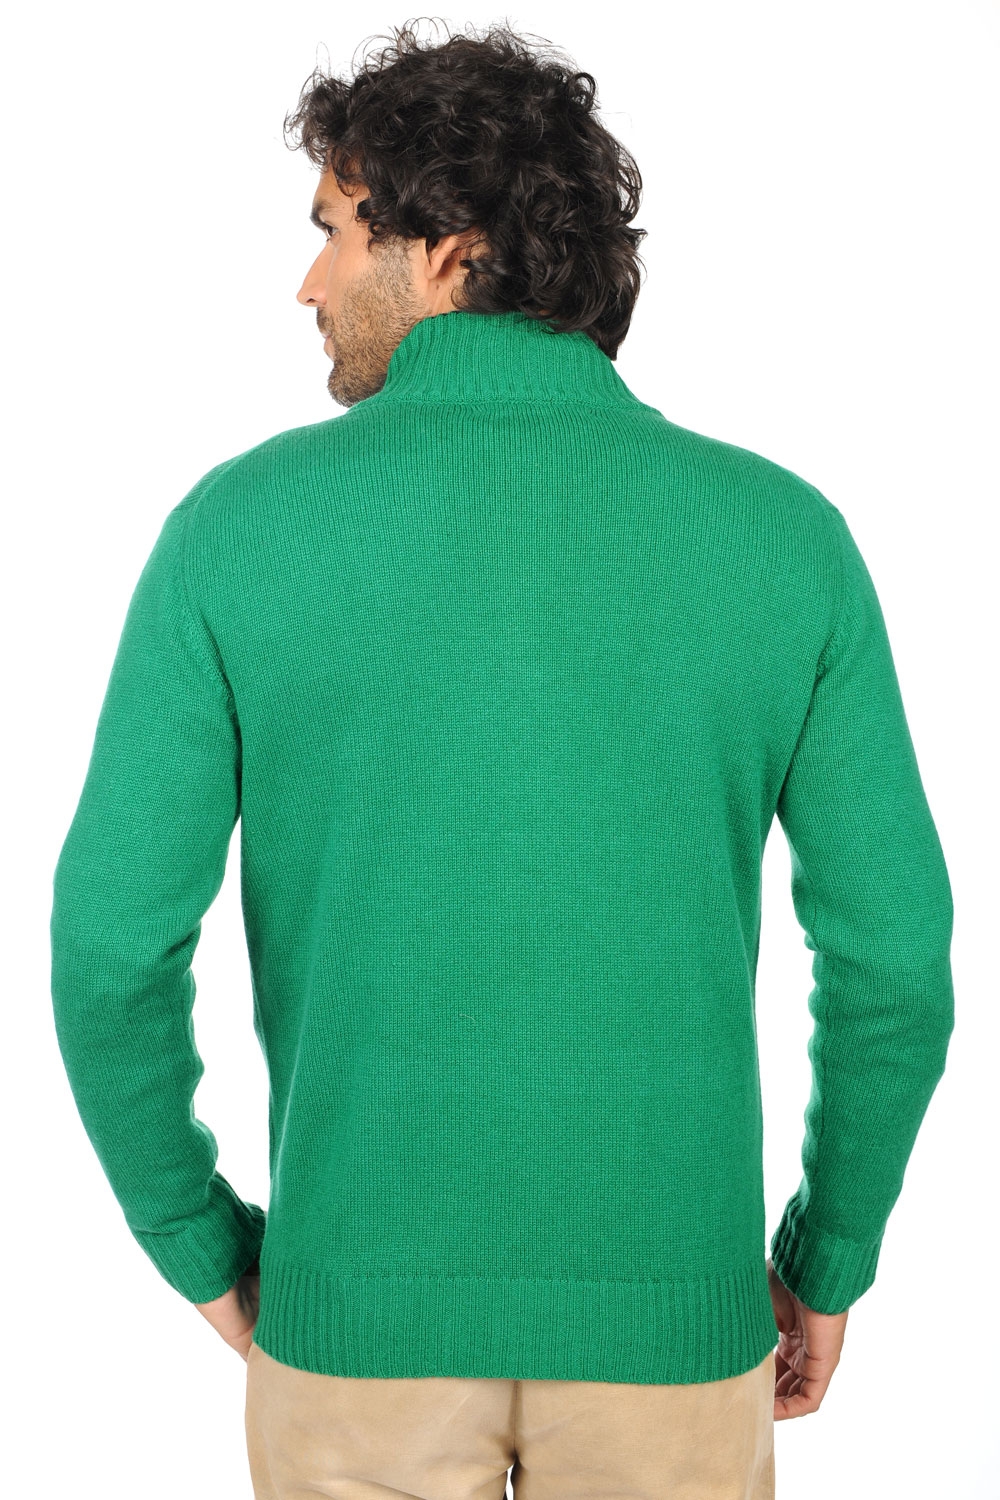 Cashmere men waistcoat sleeveless sweaters maxime evergreen dress blue m